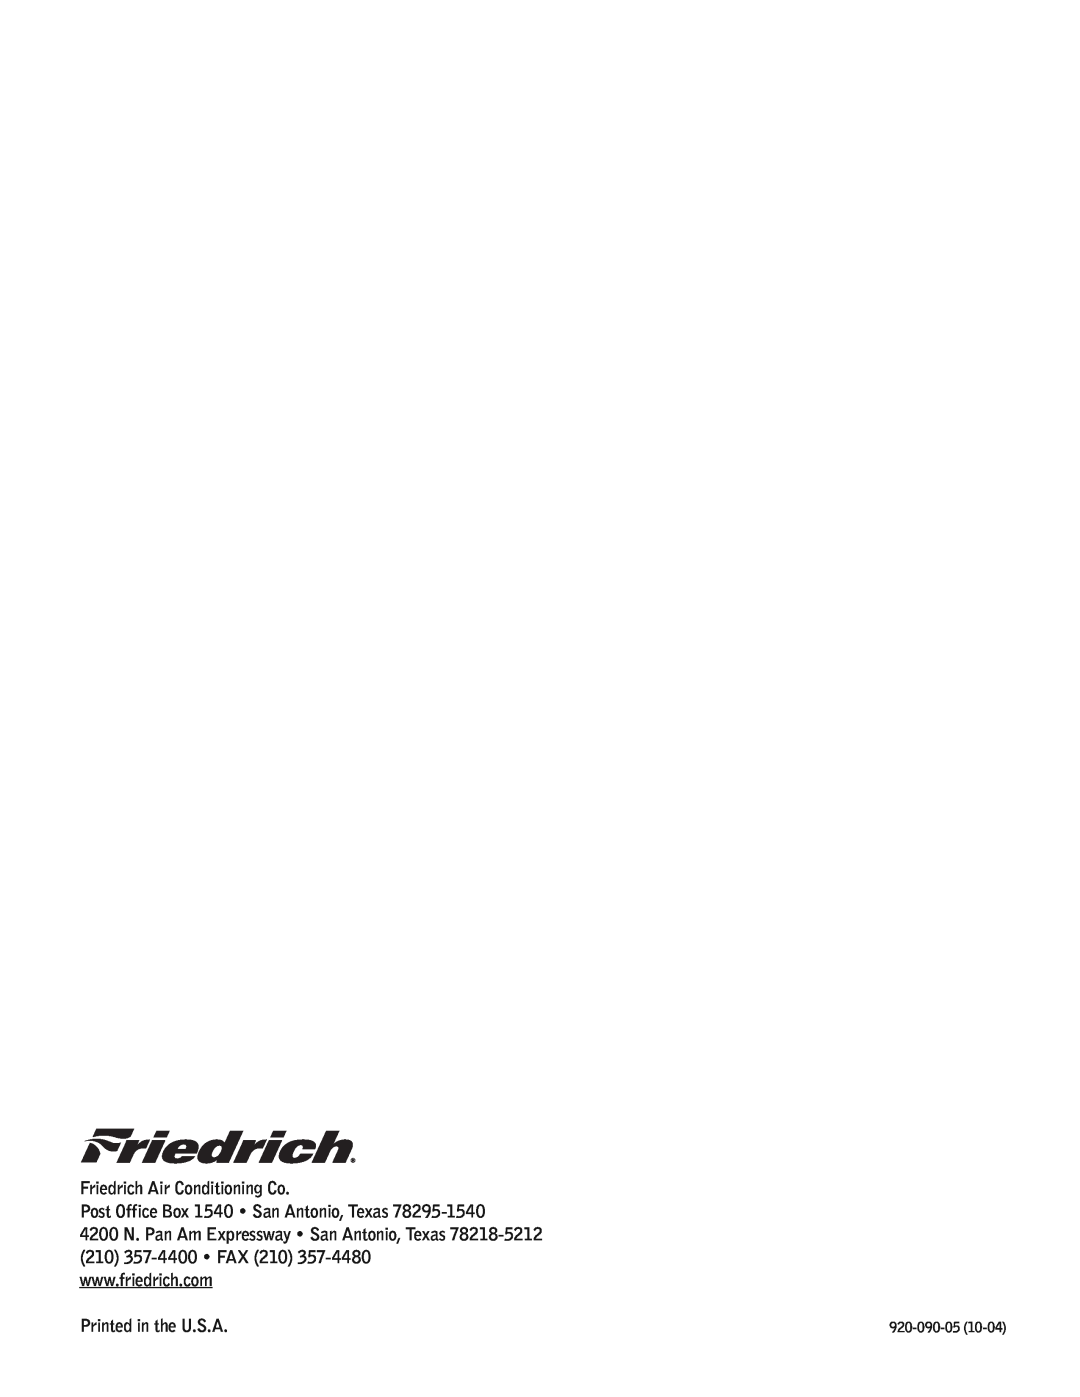 Friedrich SS09 manual Friedrich Air Conditioning Co, Post Office Box 1540 San Antonio, Texas, 920-090-05 